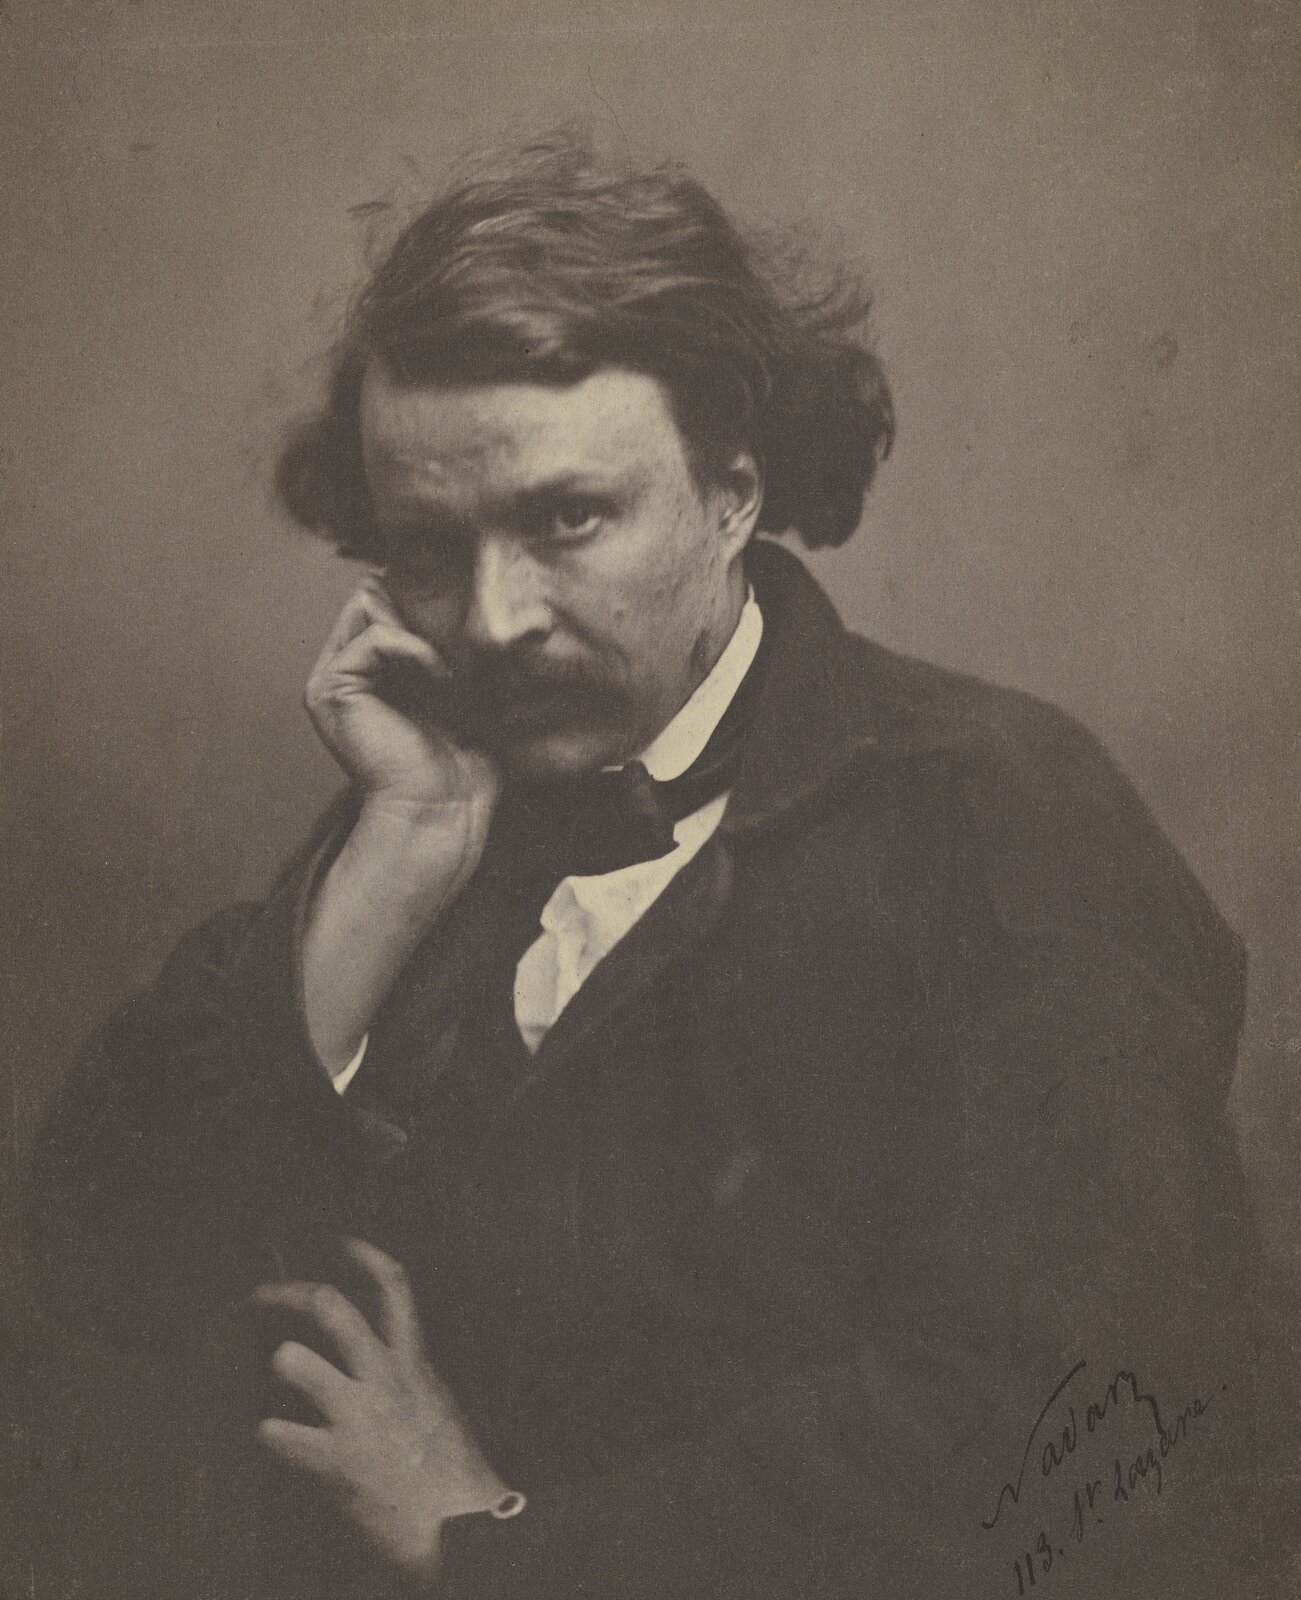 Autoportret Źródło: Nadar, Autoportret, 1854–1855, fotografia, J. Paul Getty Museum, Los Angeles, domena publiczna.